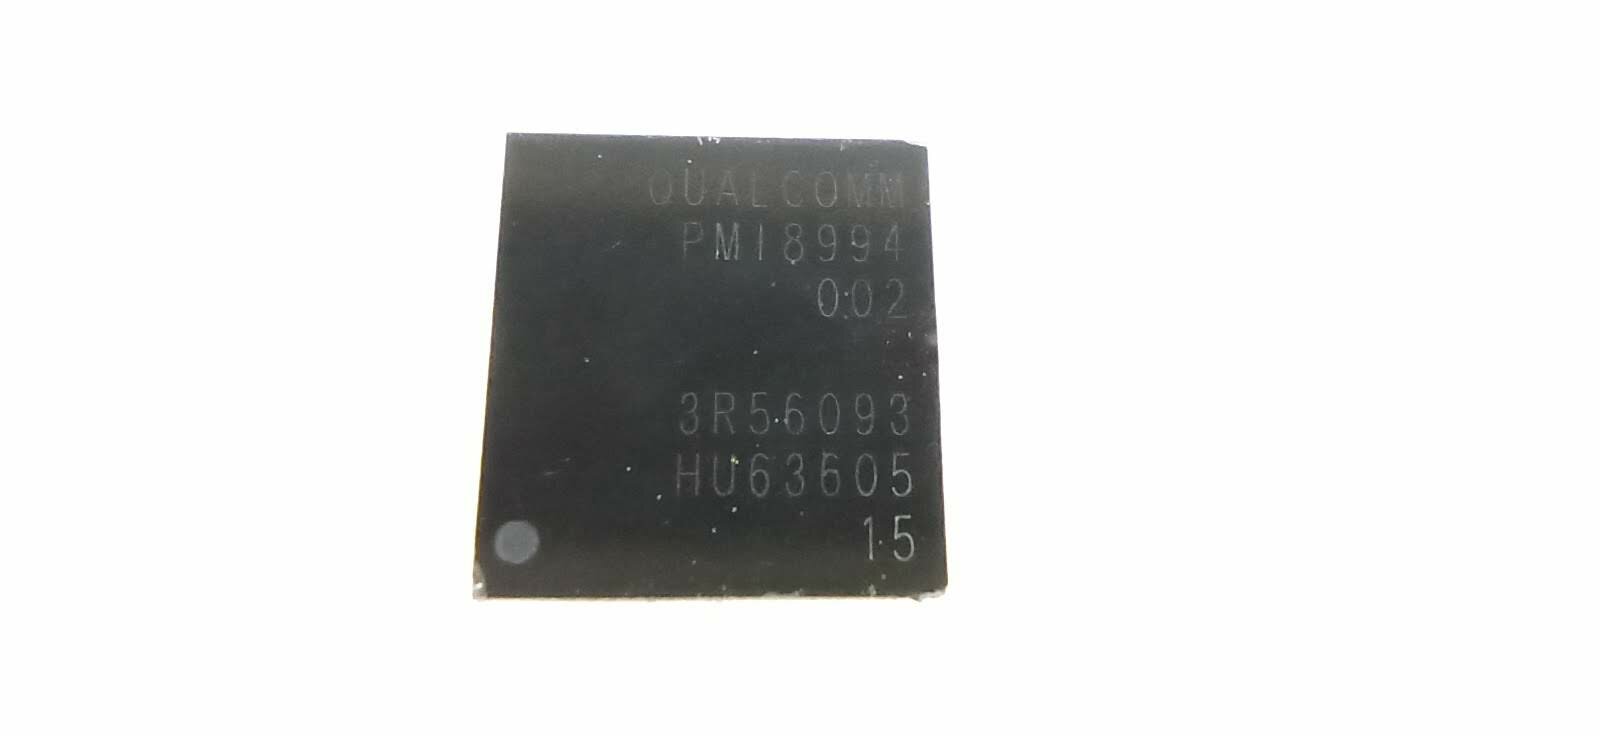 Контроллер питания Qualcomm PMI8994 002